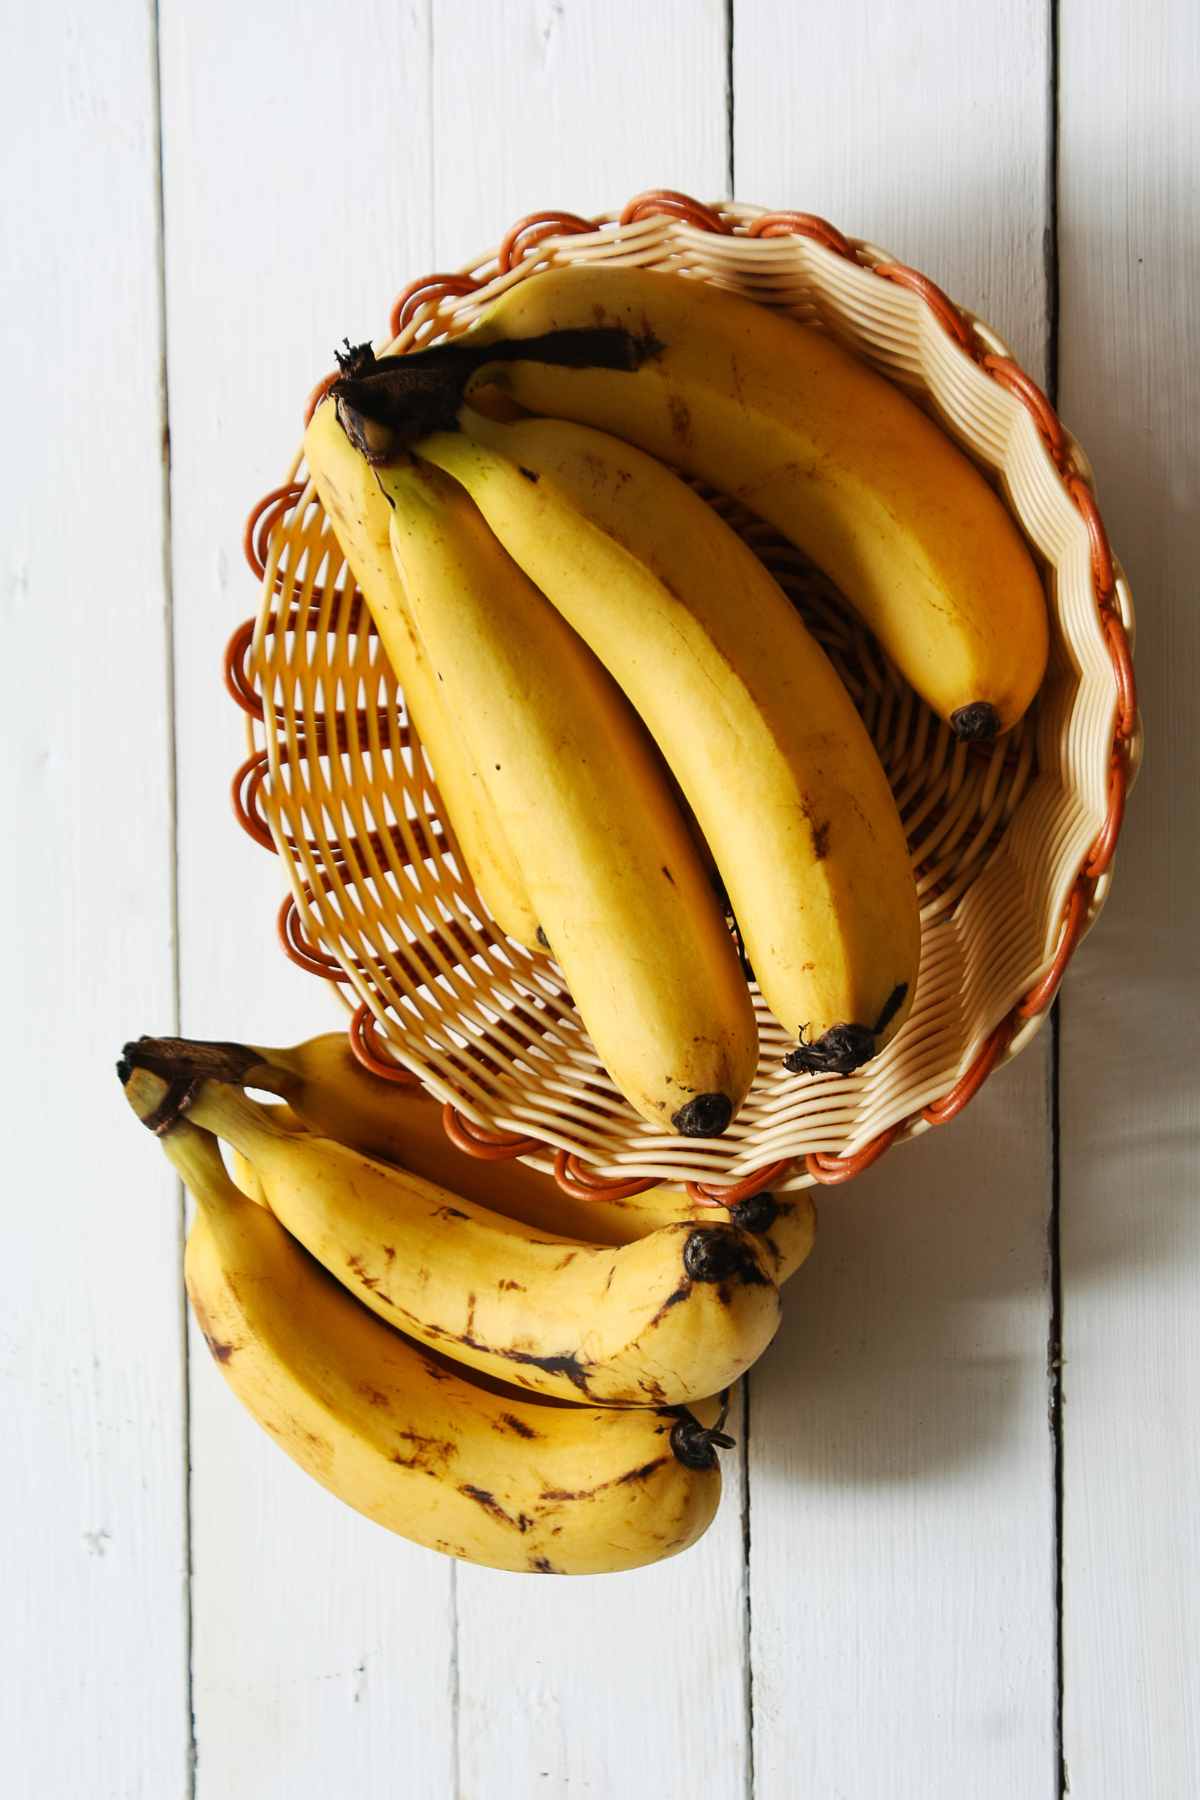 mashed bananas